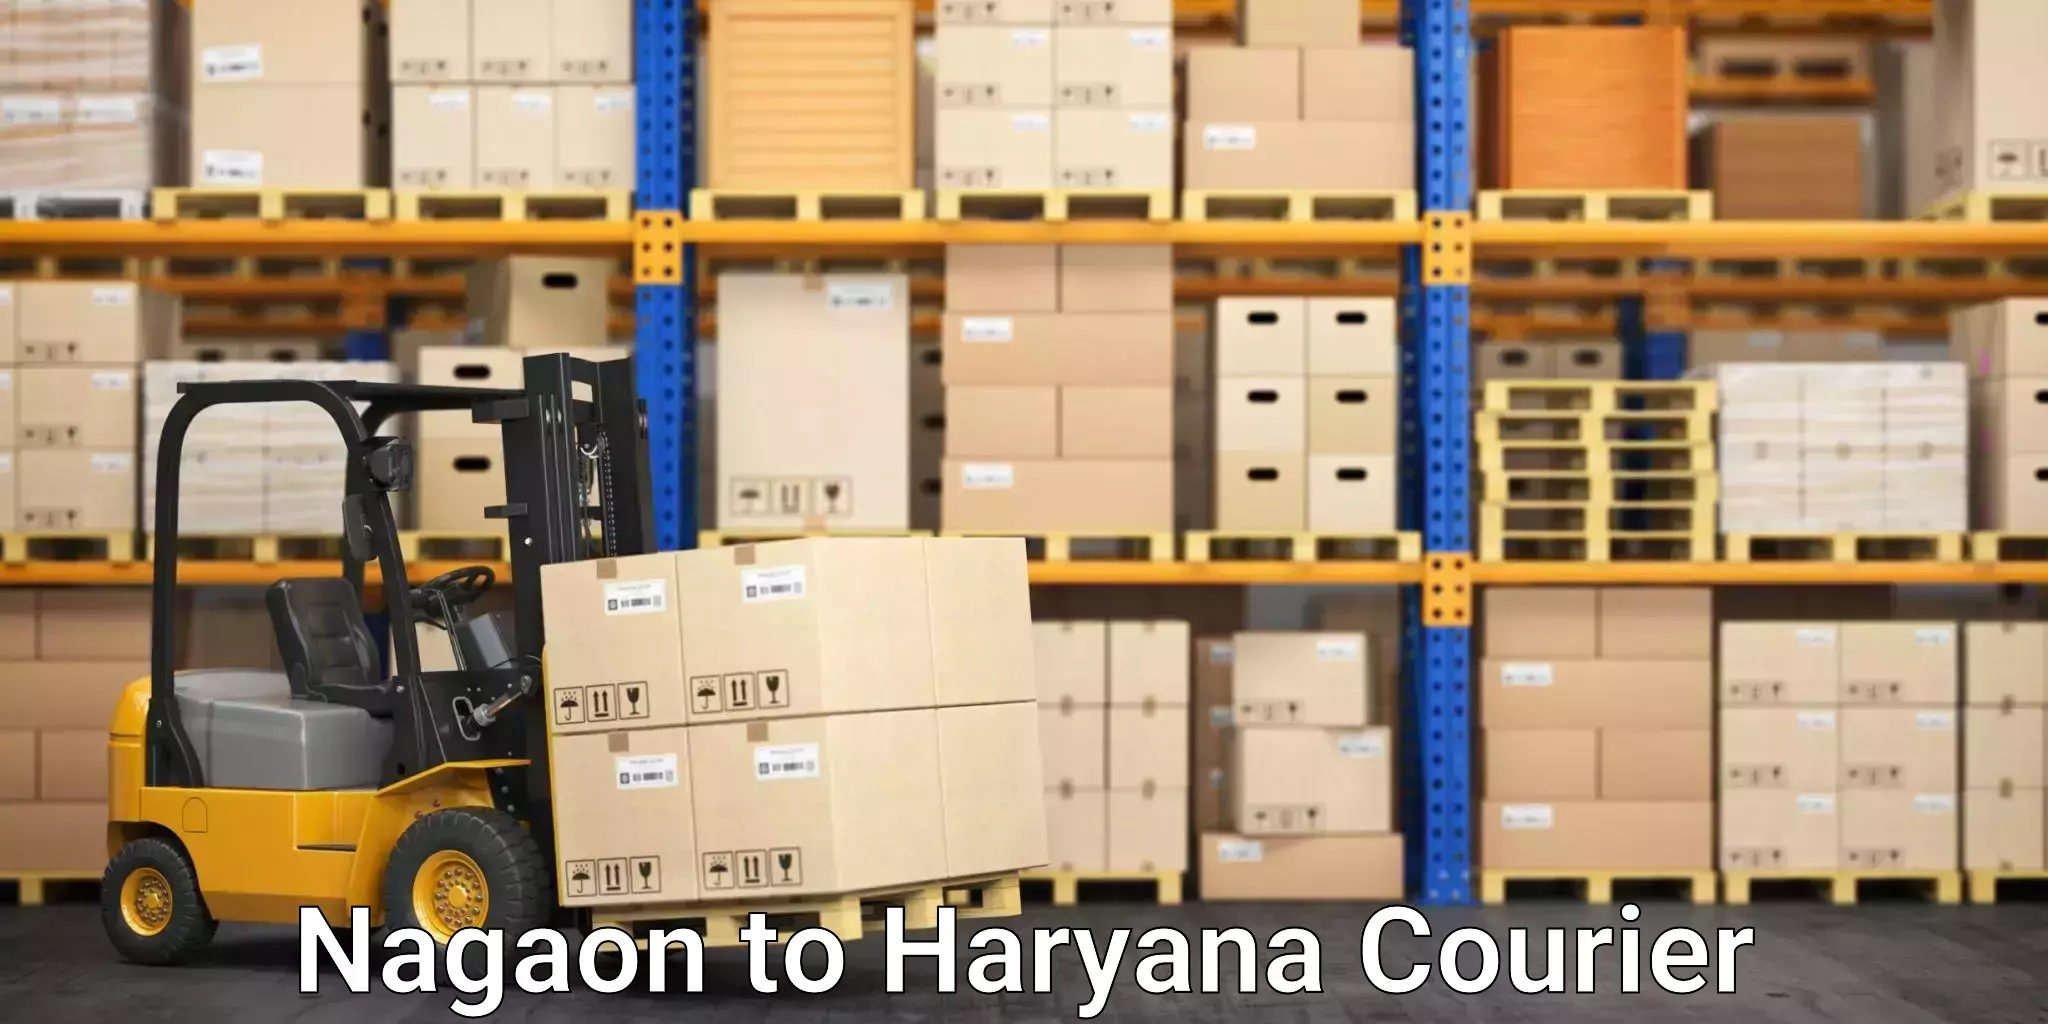 Logistics service provider Nagaon to NCR Haryana